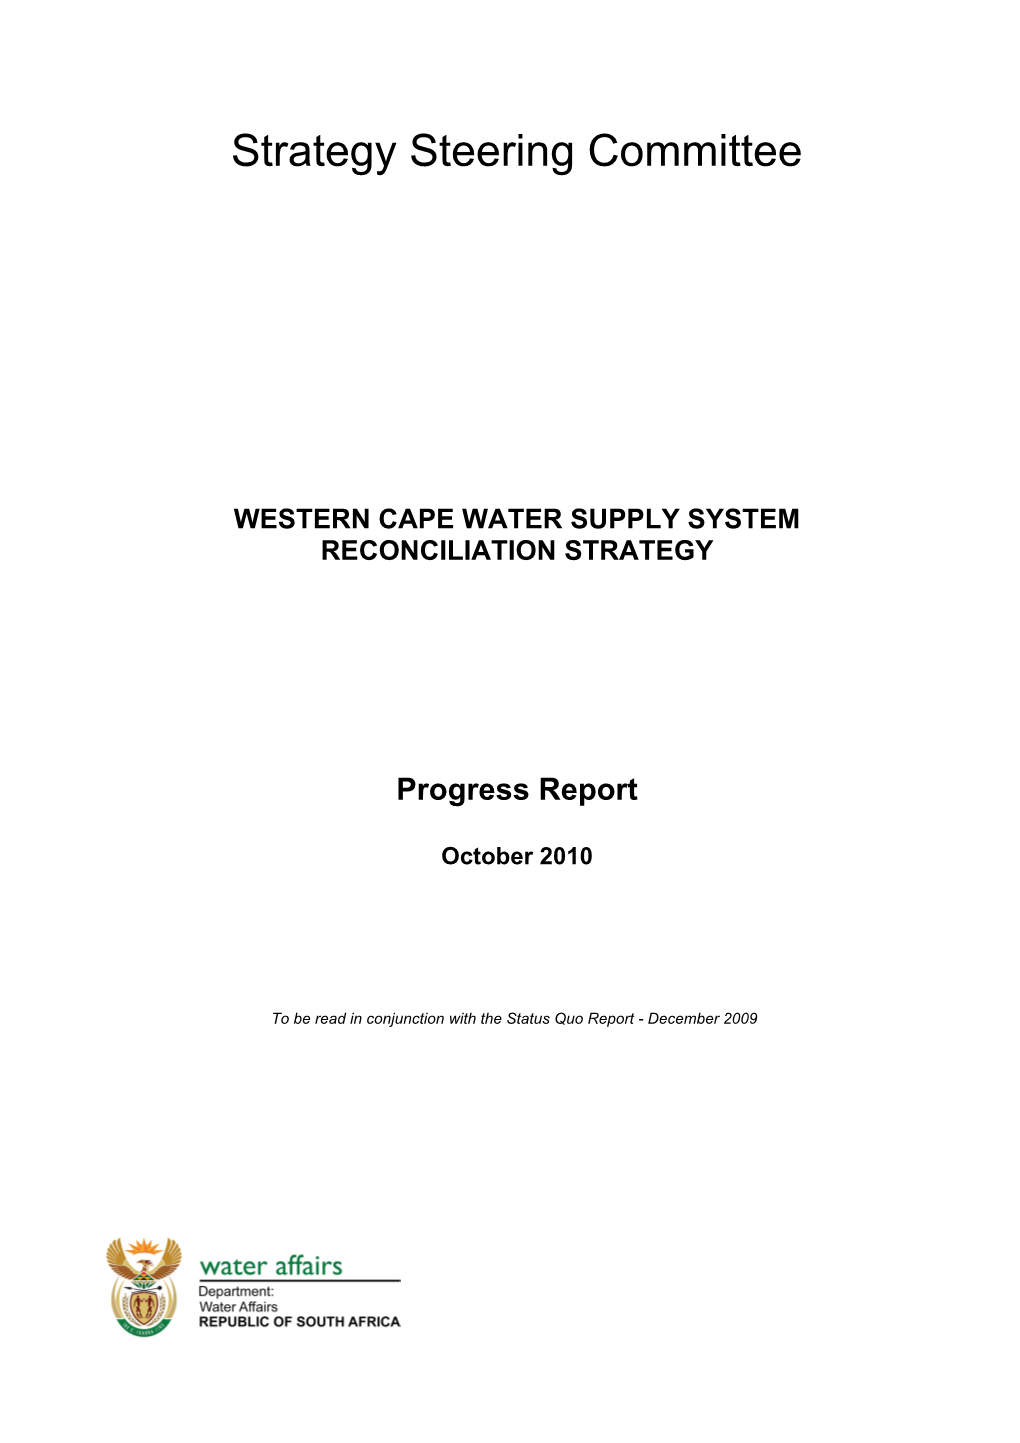 Western Cape Reconciliation Strategy Study: 2010 Progress Report 1